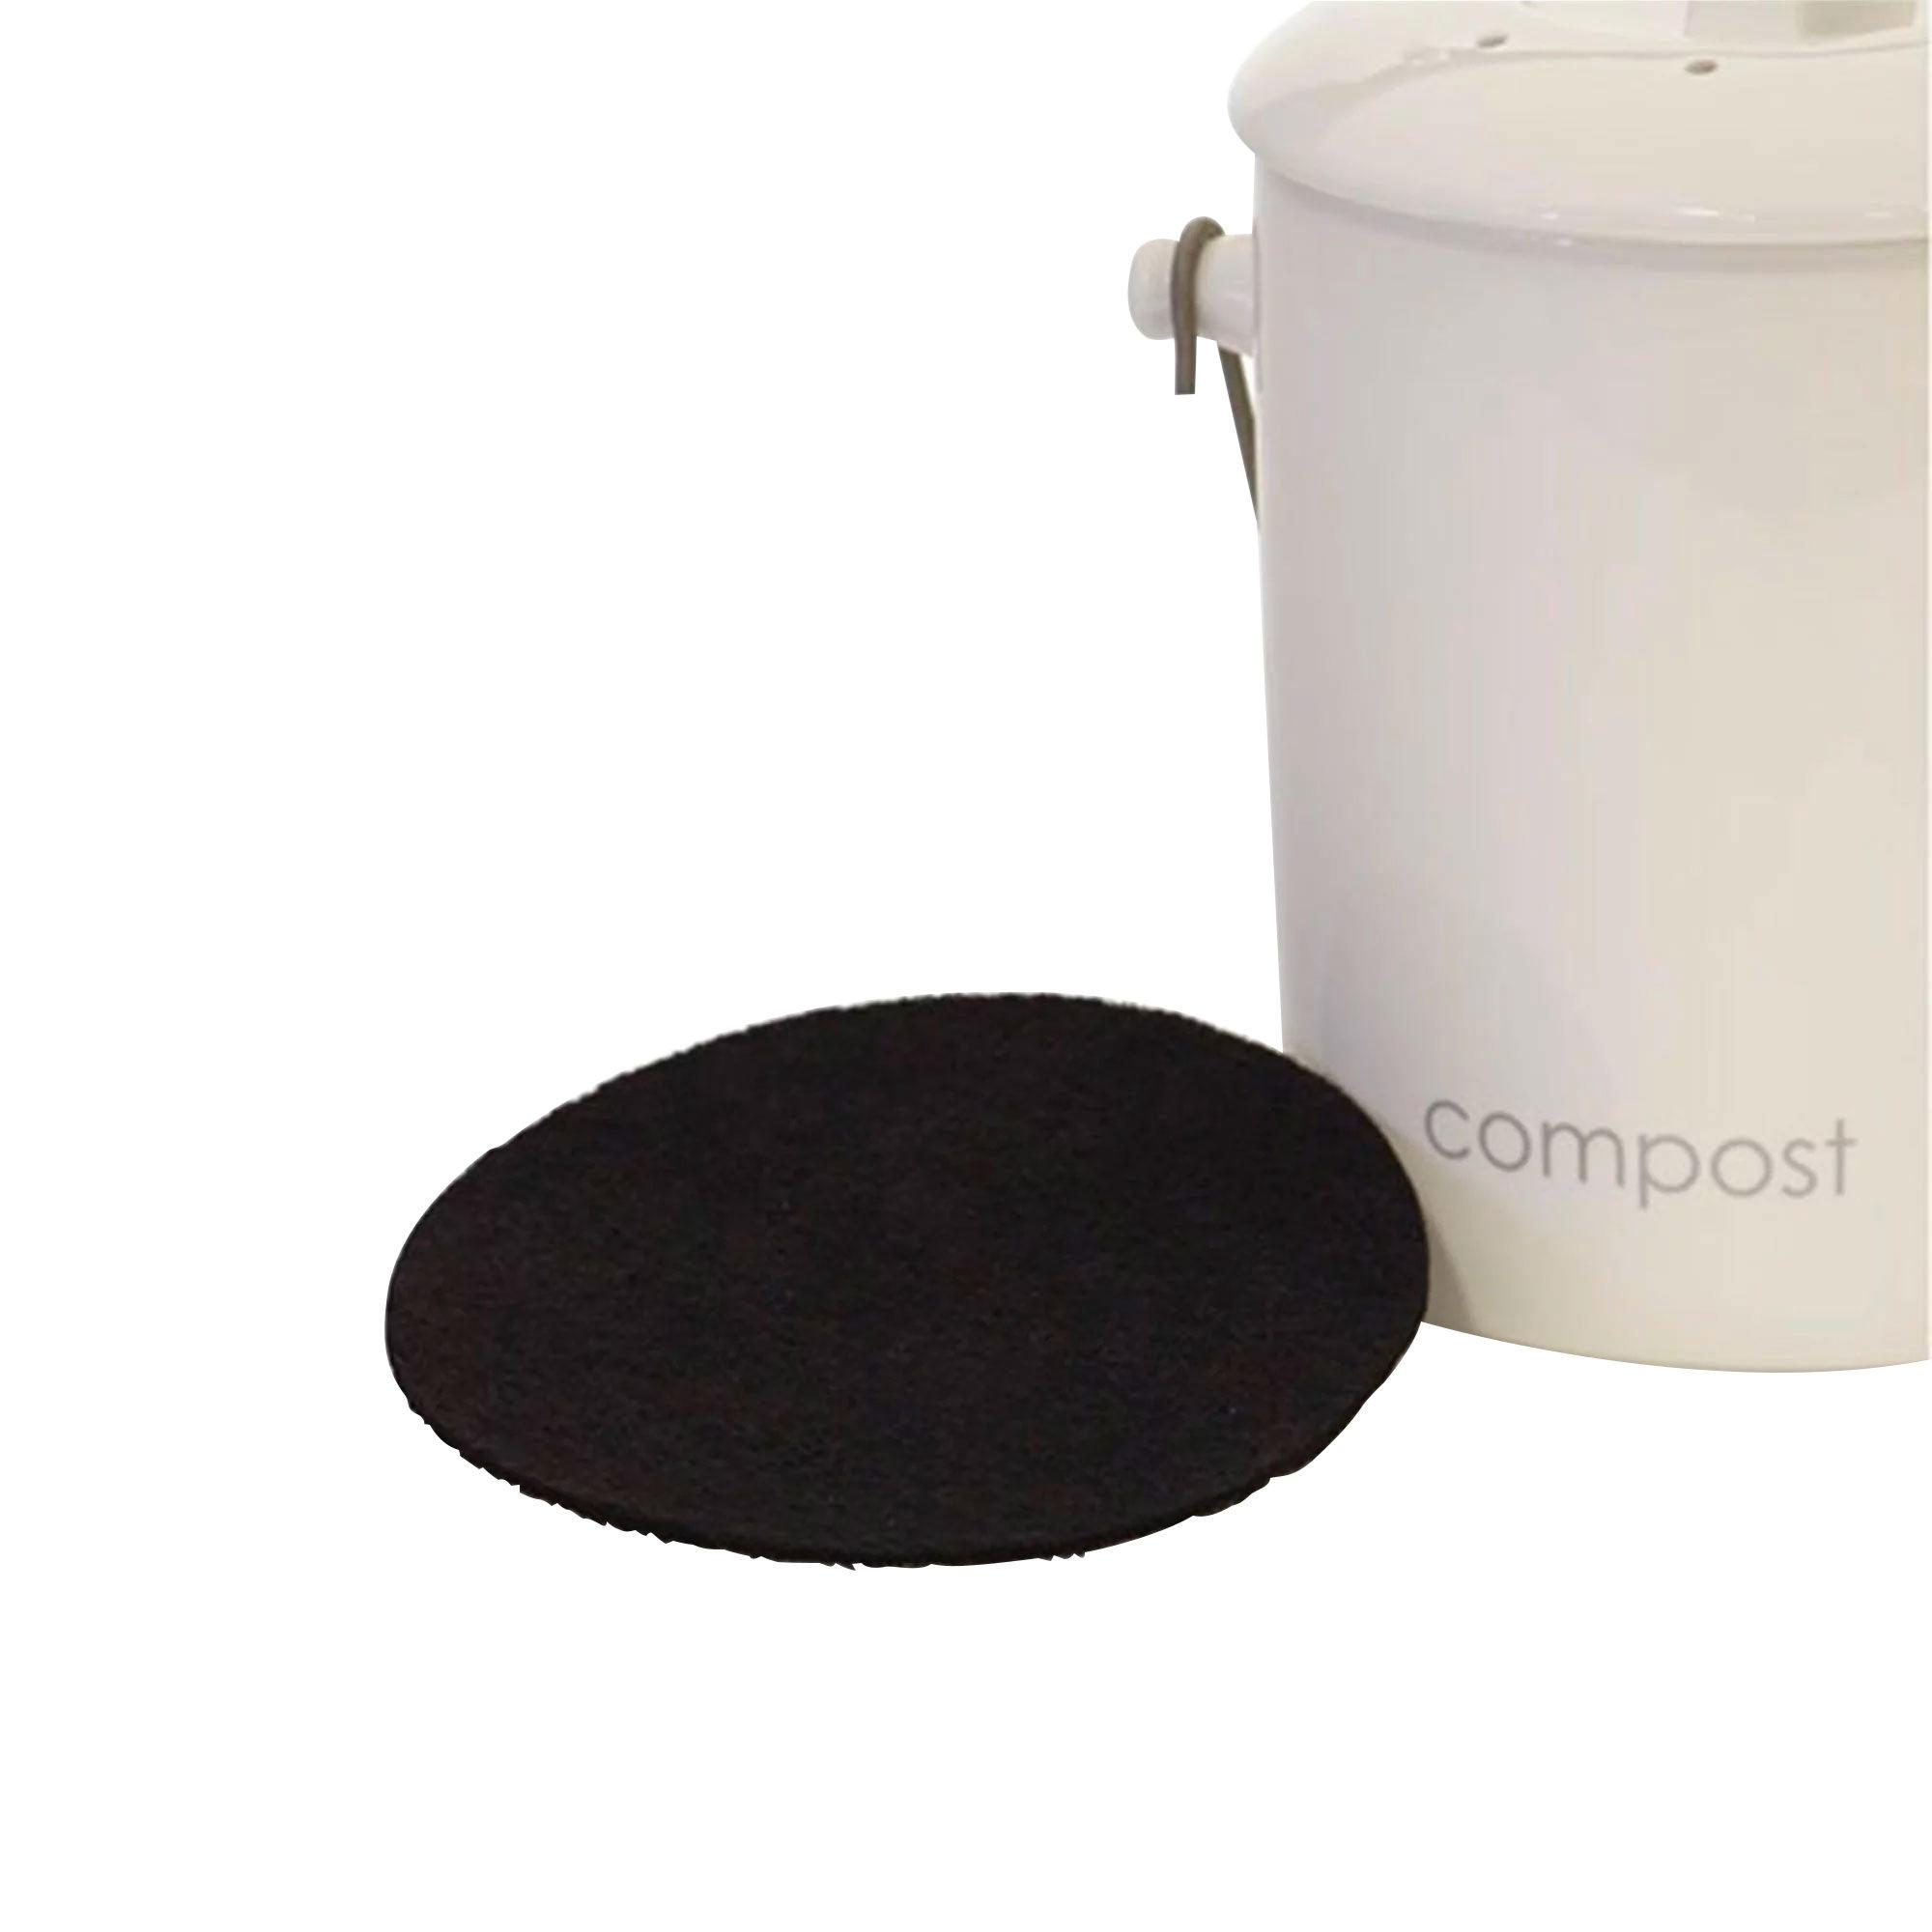 Ecology Compost Bin Filter Image 1